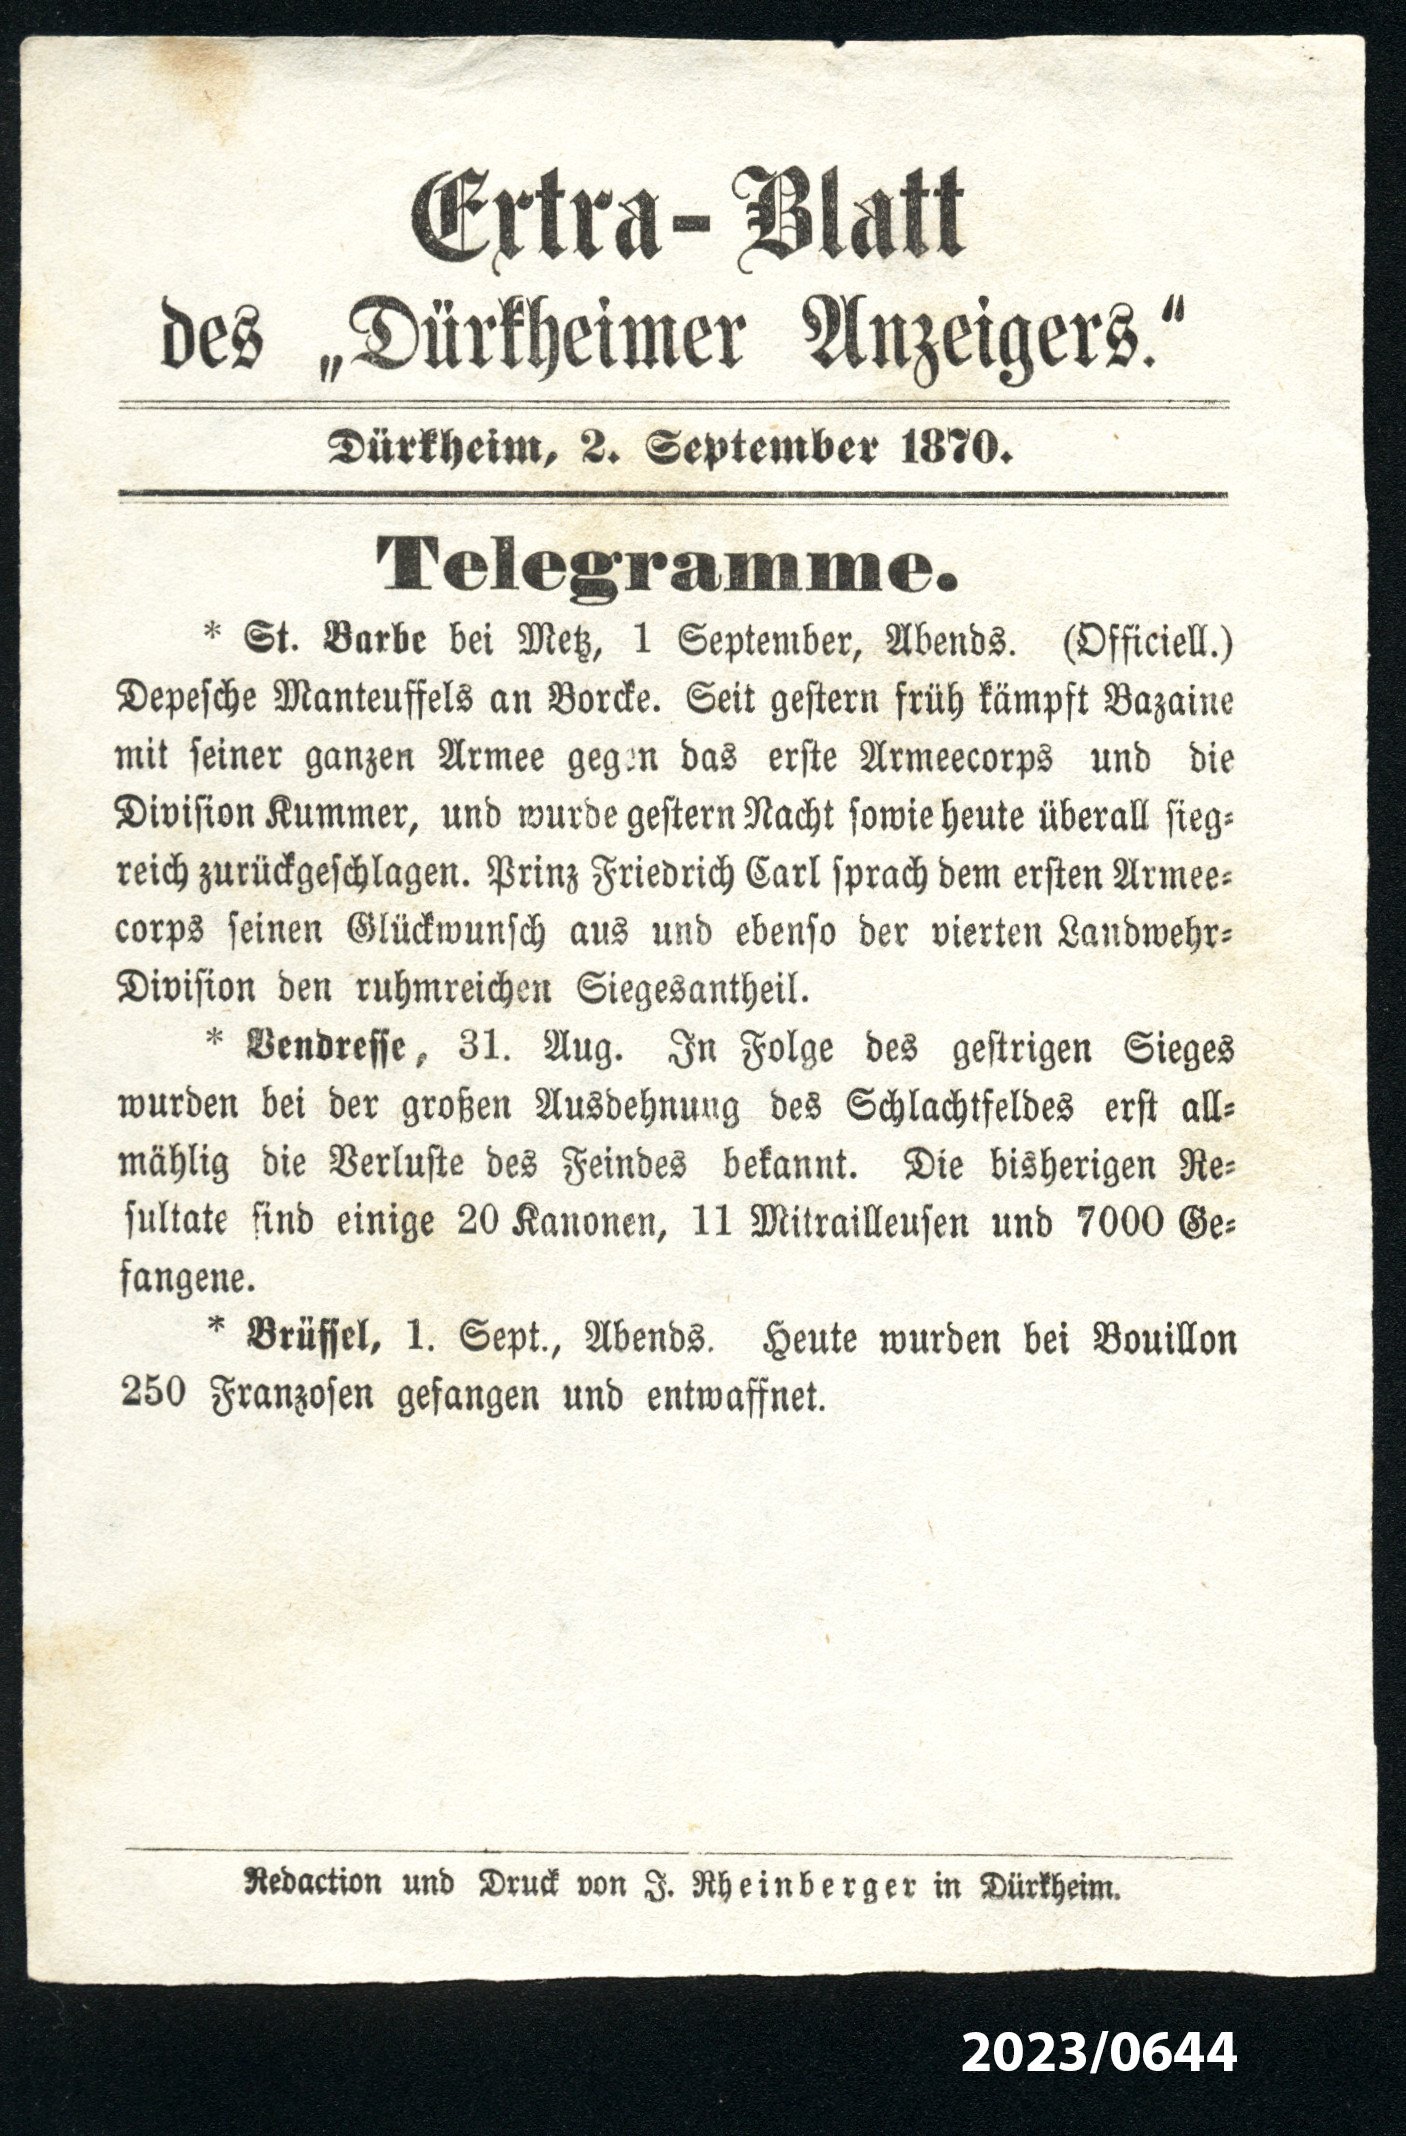 Extra-Blatt des "Dürkheimer Anzeigers." 2.9.1870 (Stadtmuseum Bad Dürkheim im Kulturzentrum Haus Catoir CC BY-NC-SA)